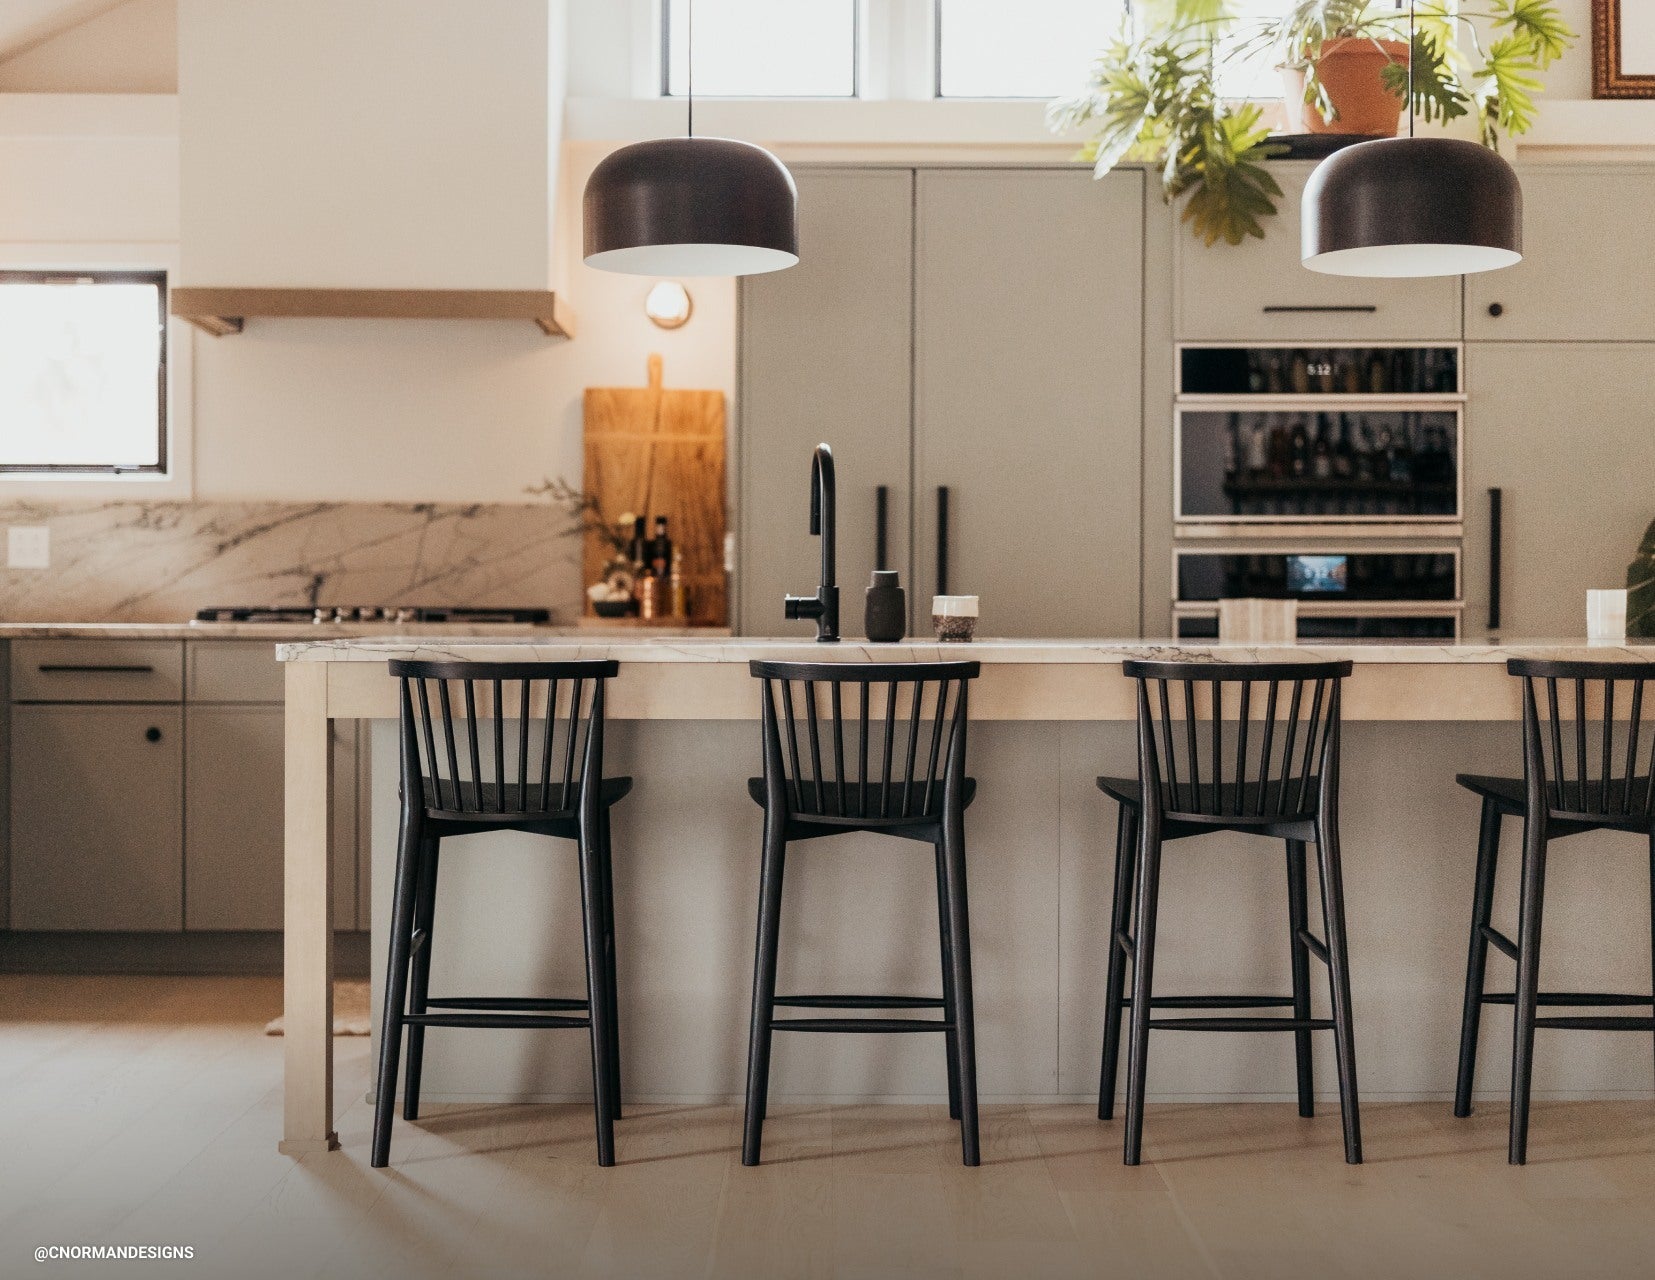 A modern kitchen via @cnormandesigns.